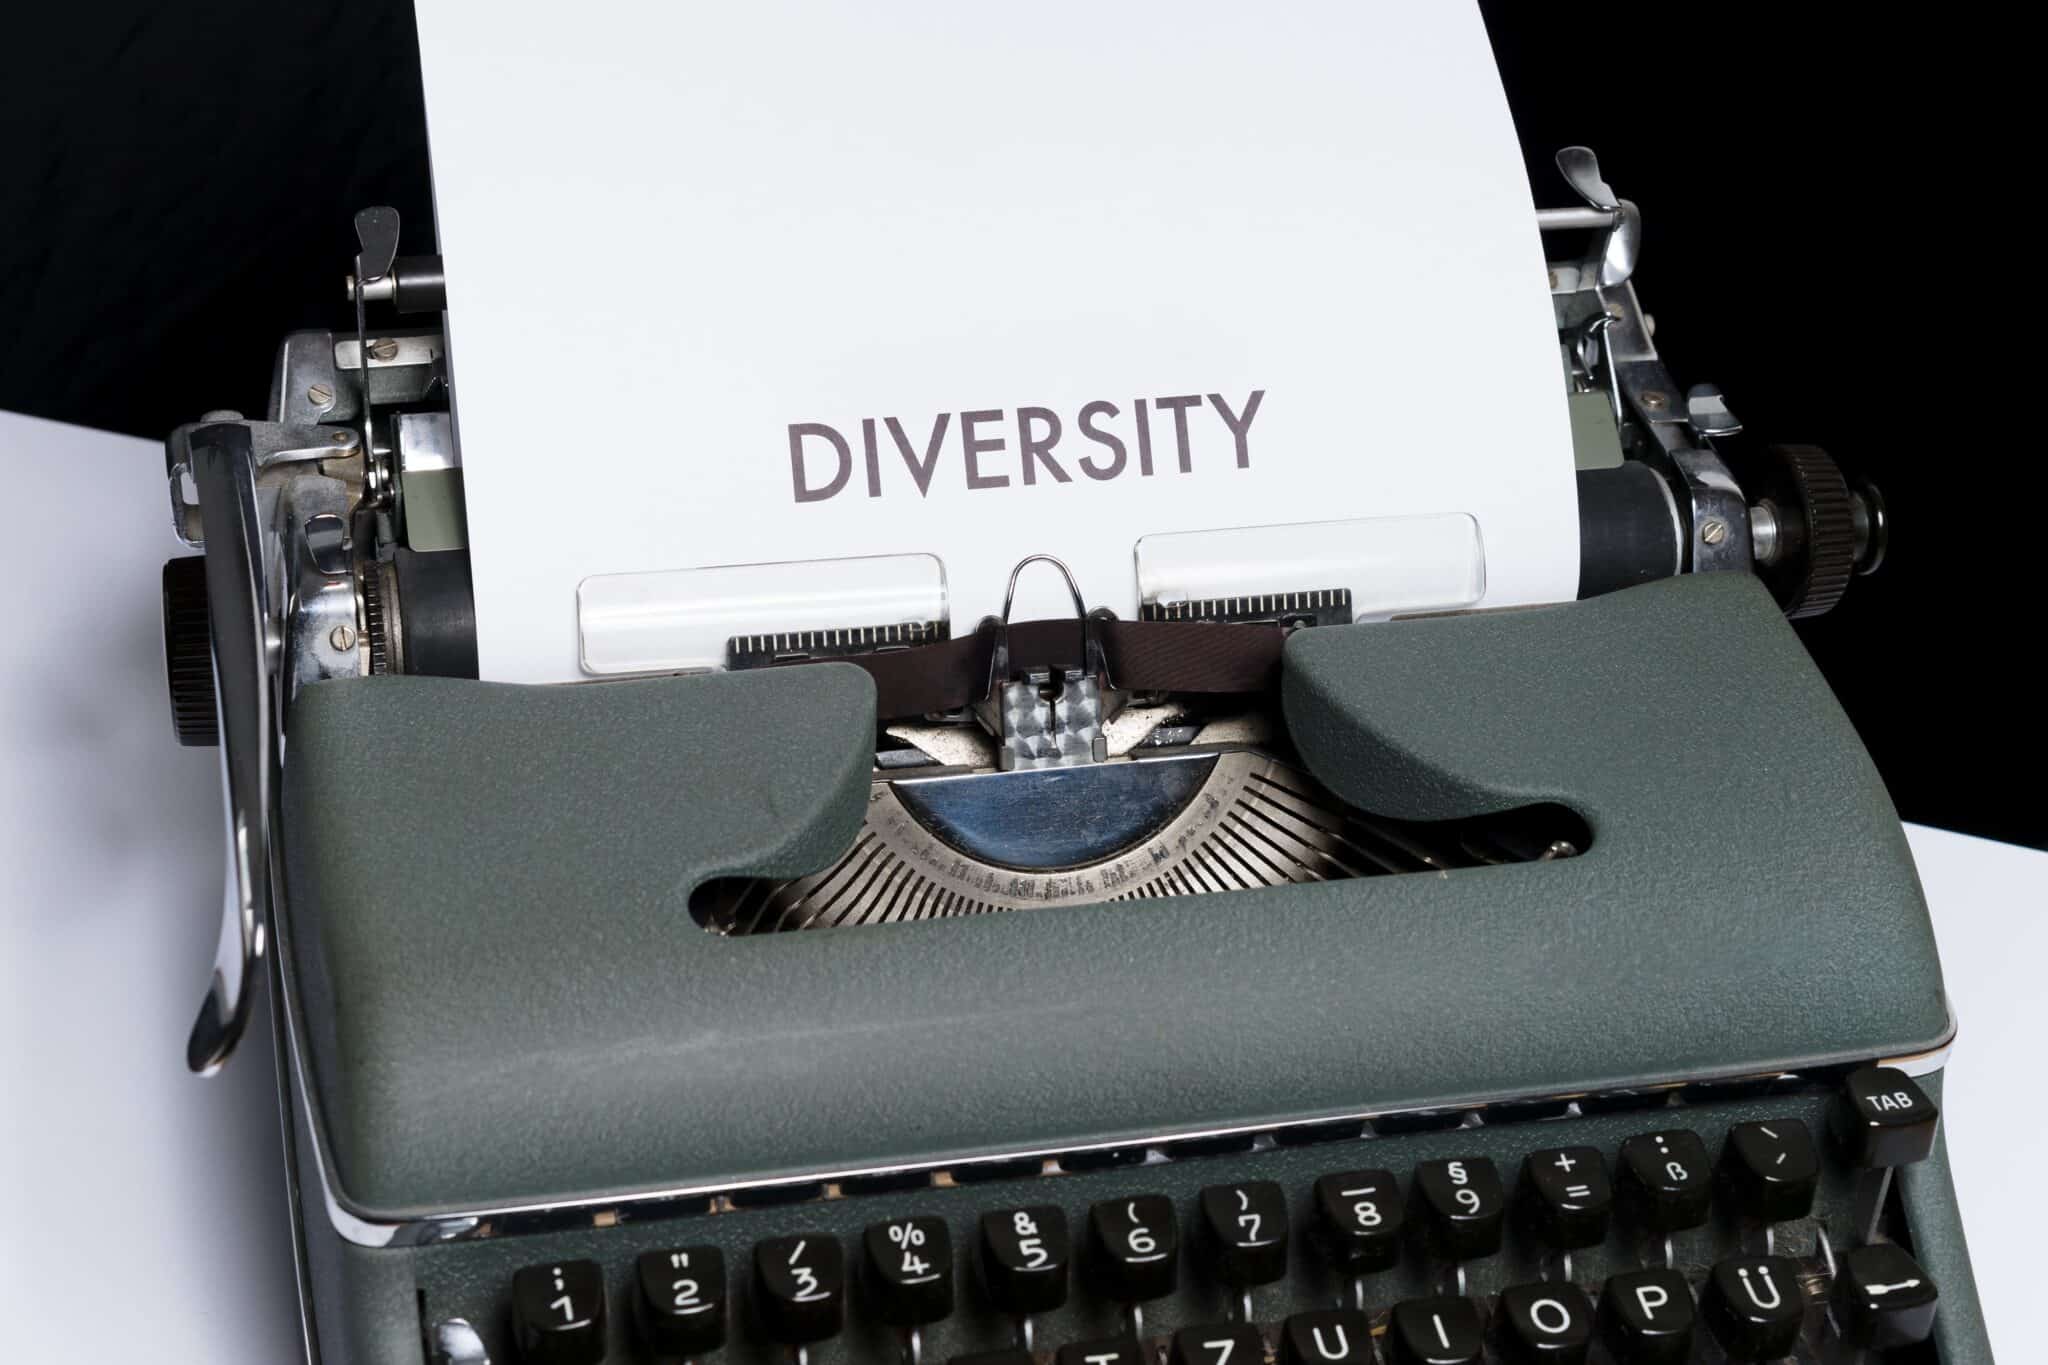 Typewriter with diversity paper